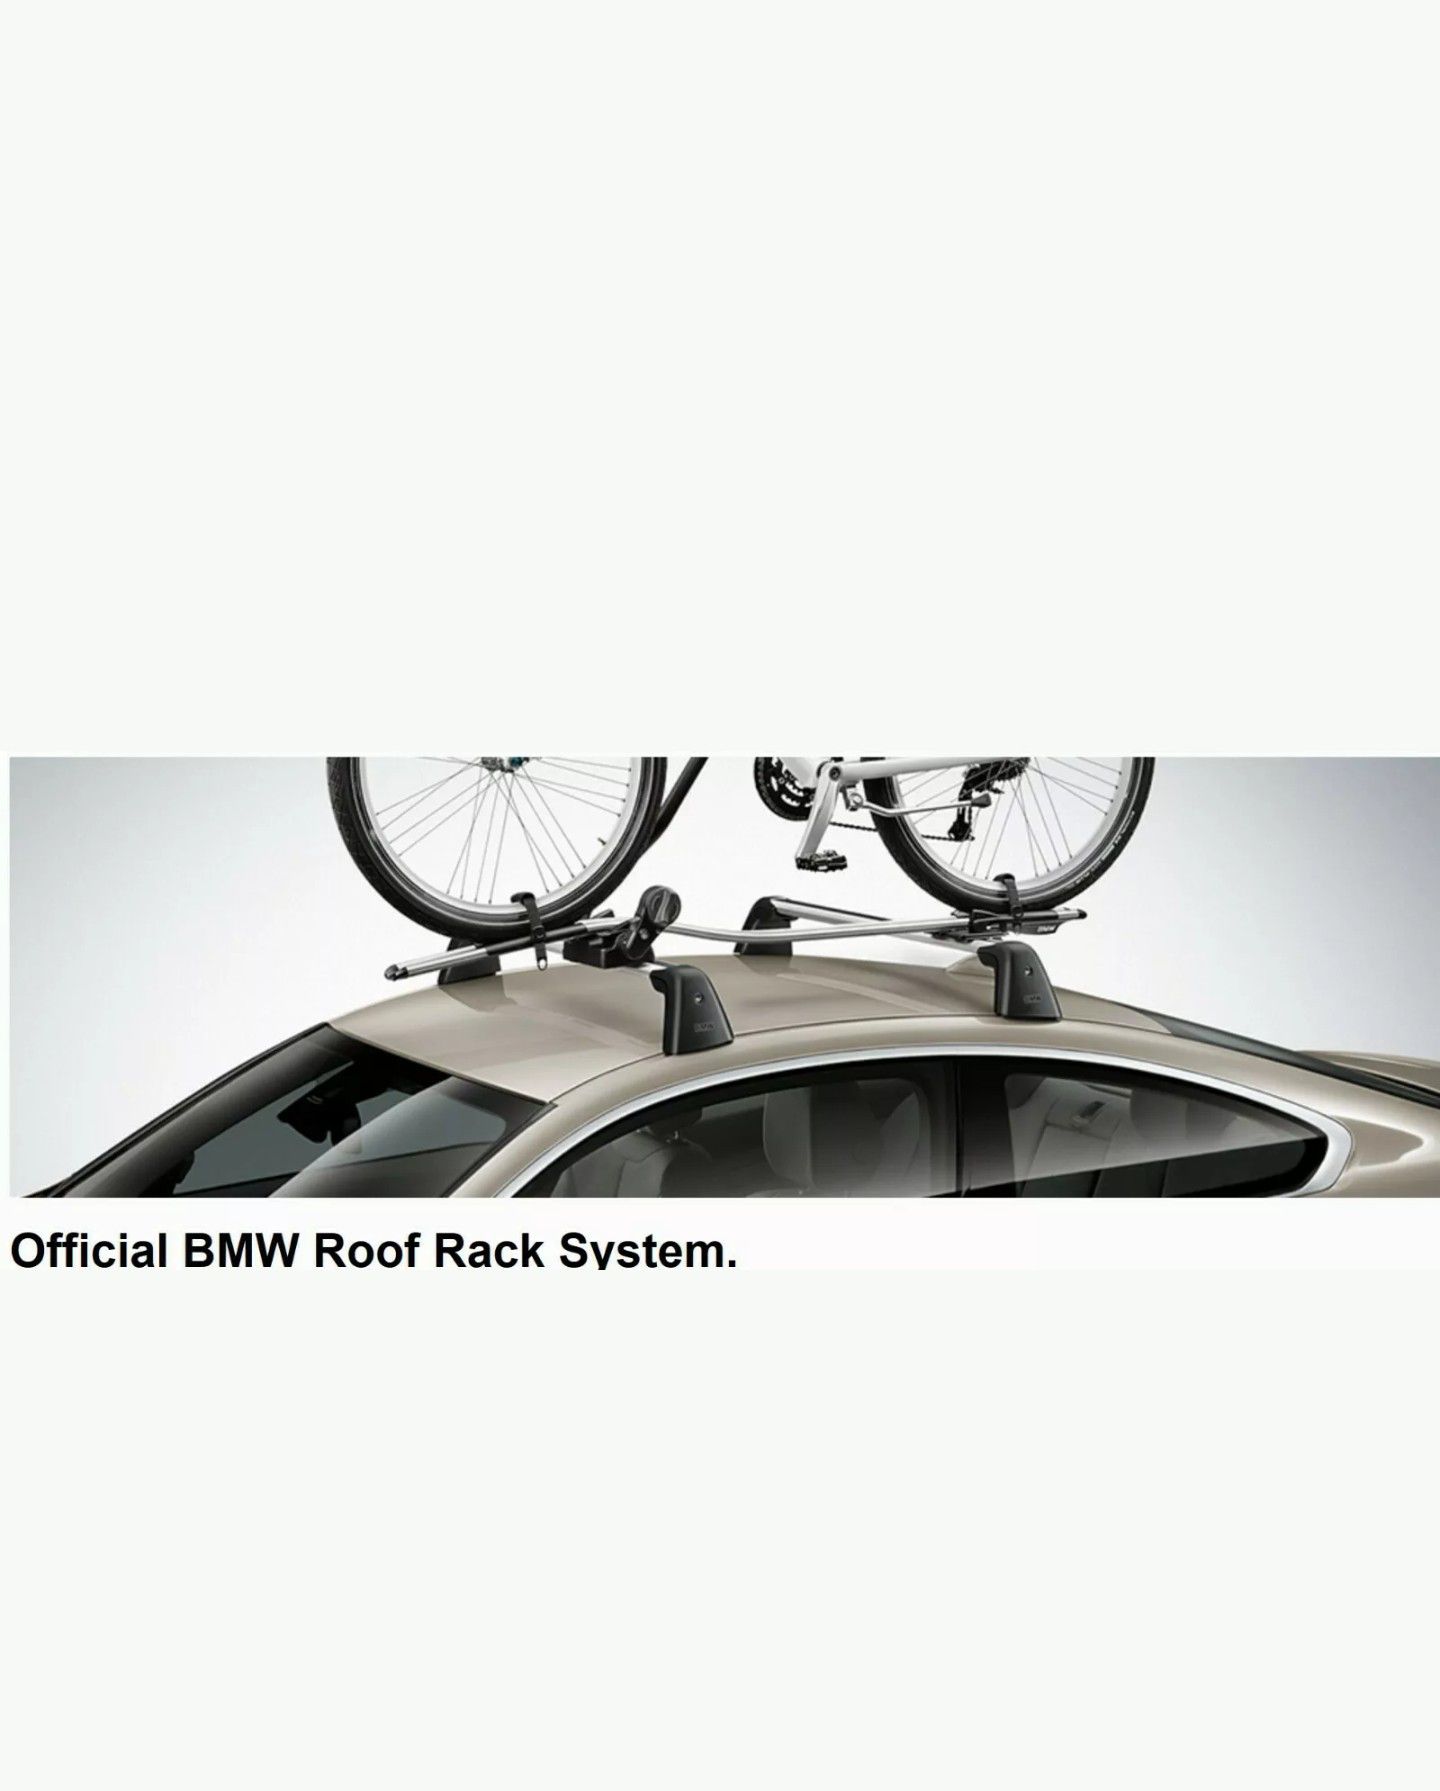 TWO BMW Bike Rack